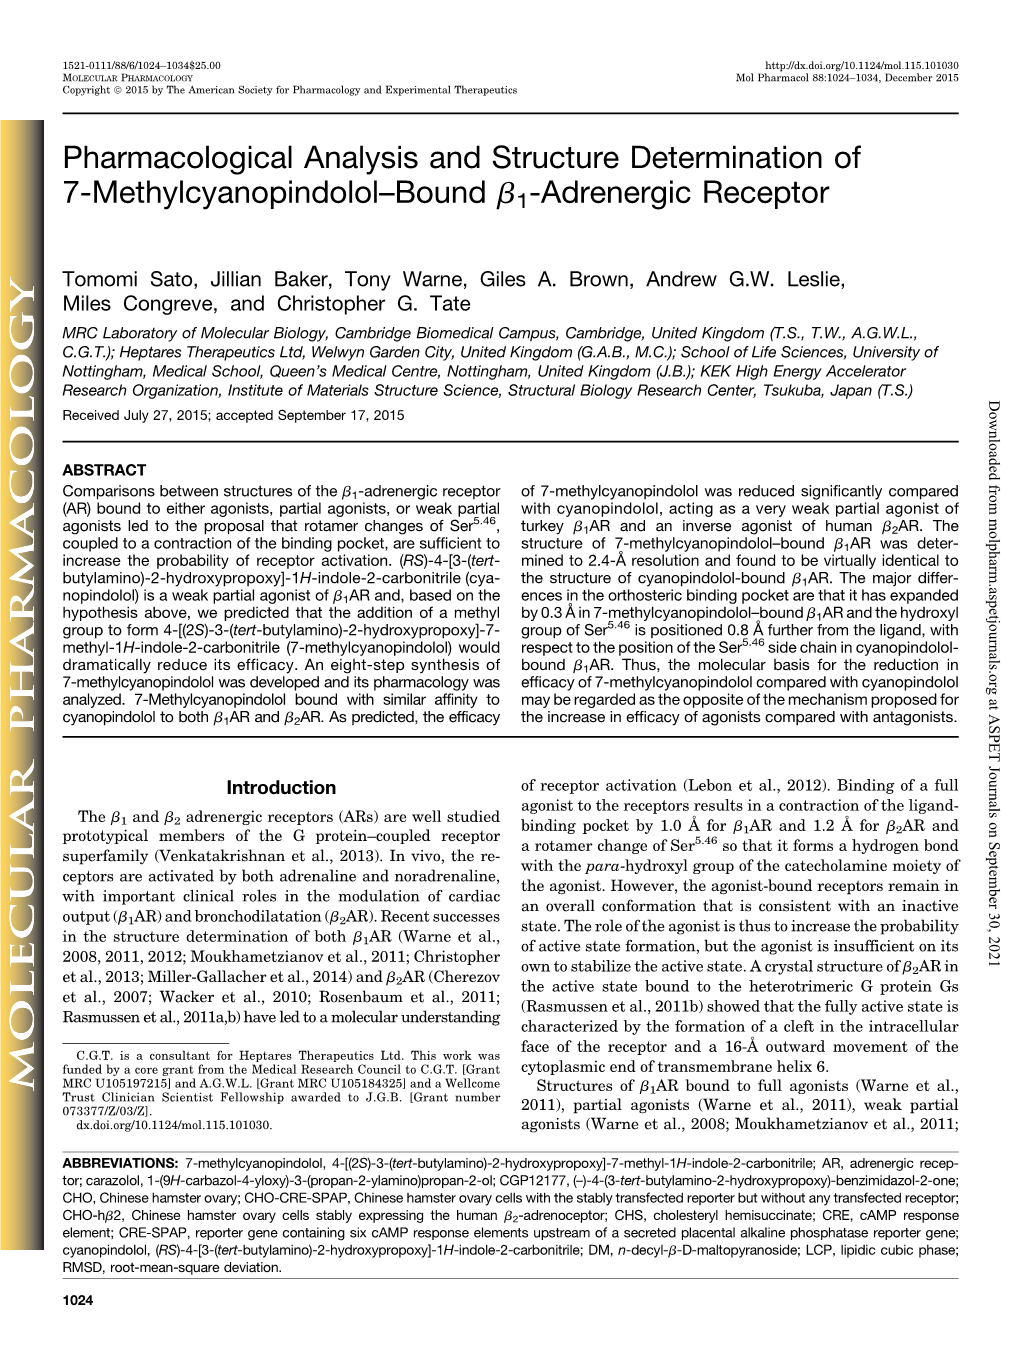 Pharmacological Analysis and Structure Determination of 7-Methylcyanopindolol–Bound B1-Adrenergic Receptor